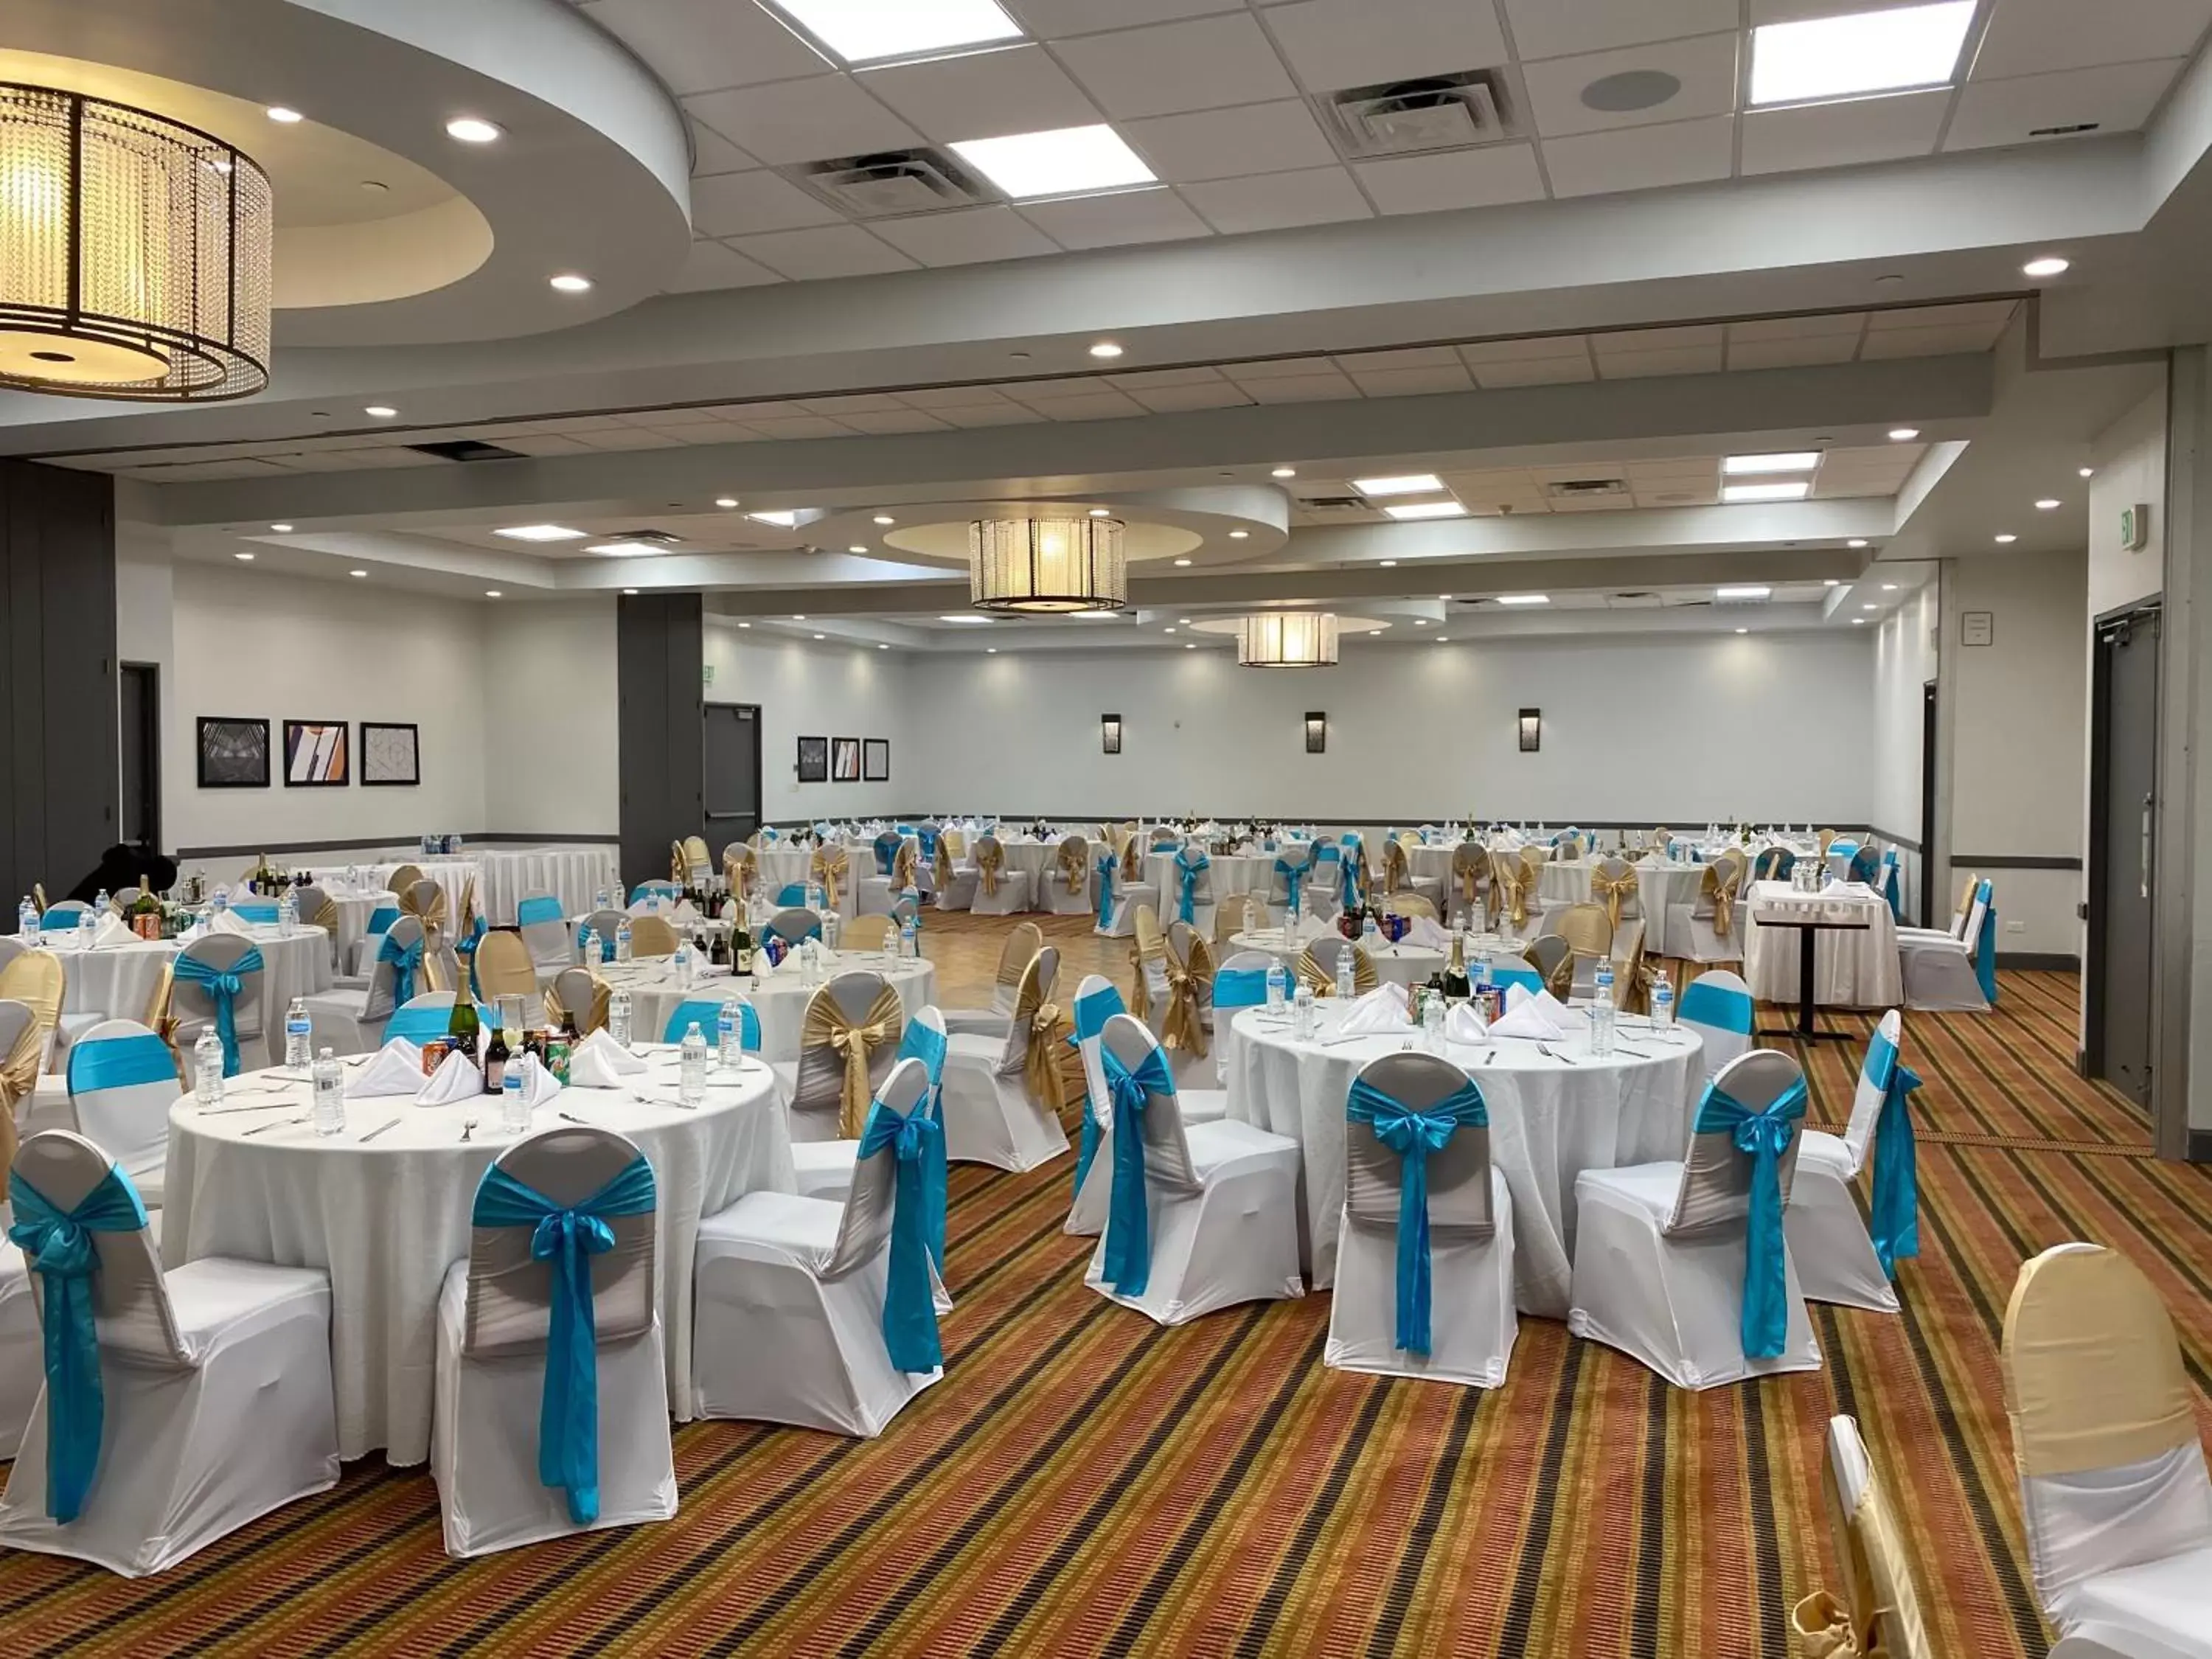 Banquet/Function facilities, Banquet Facilities in Best Western Premier Denver East